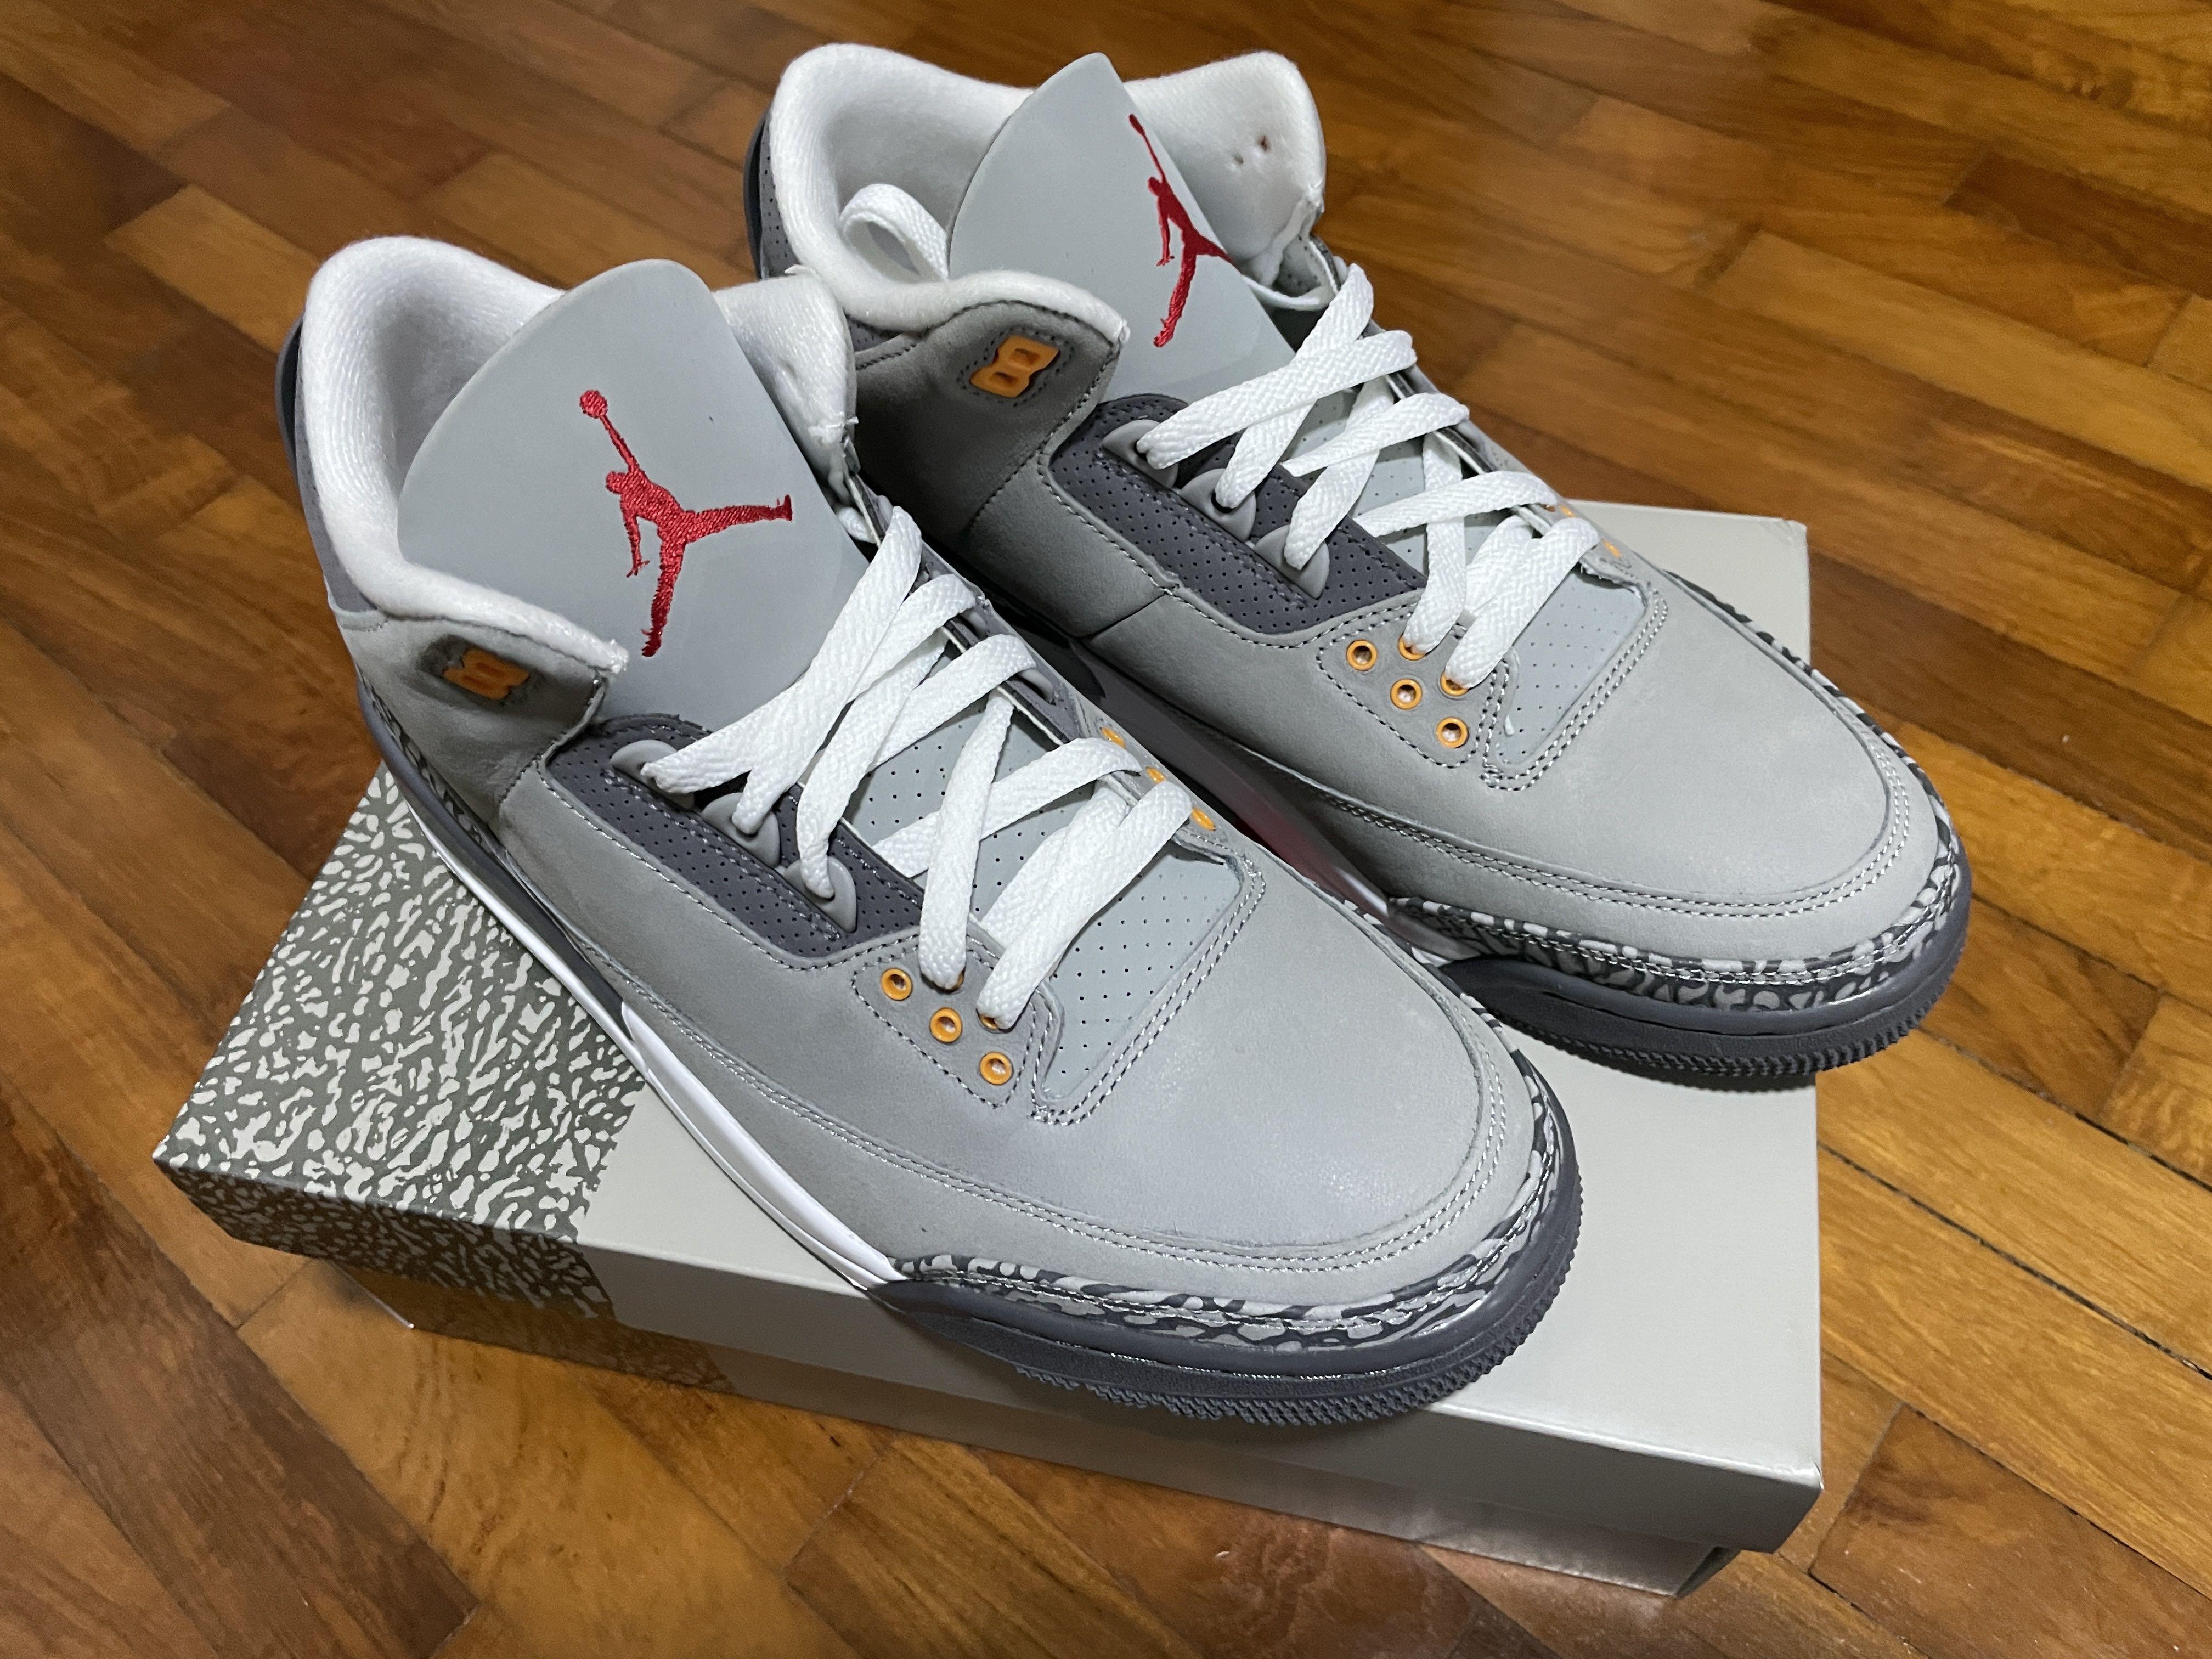 Rtp Air Jordan 3 Retro Cool Grey Men S Fashion Footwear Sneakers On Carousell